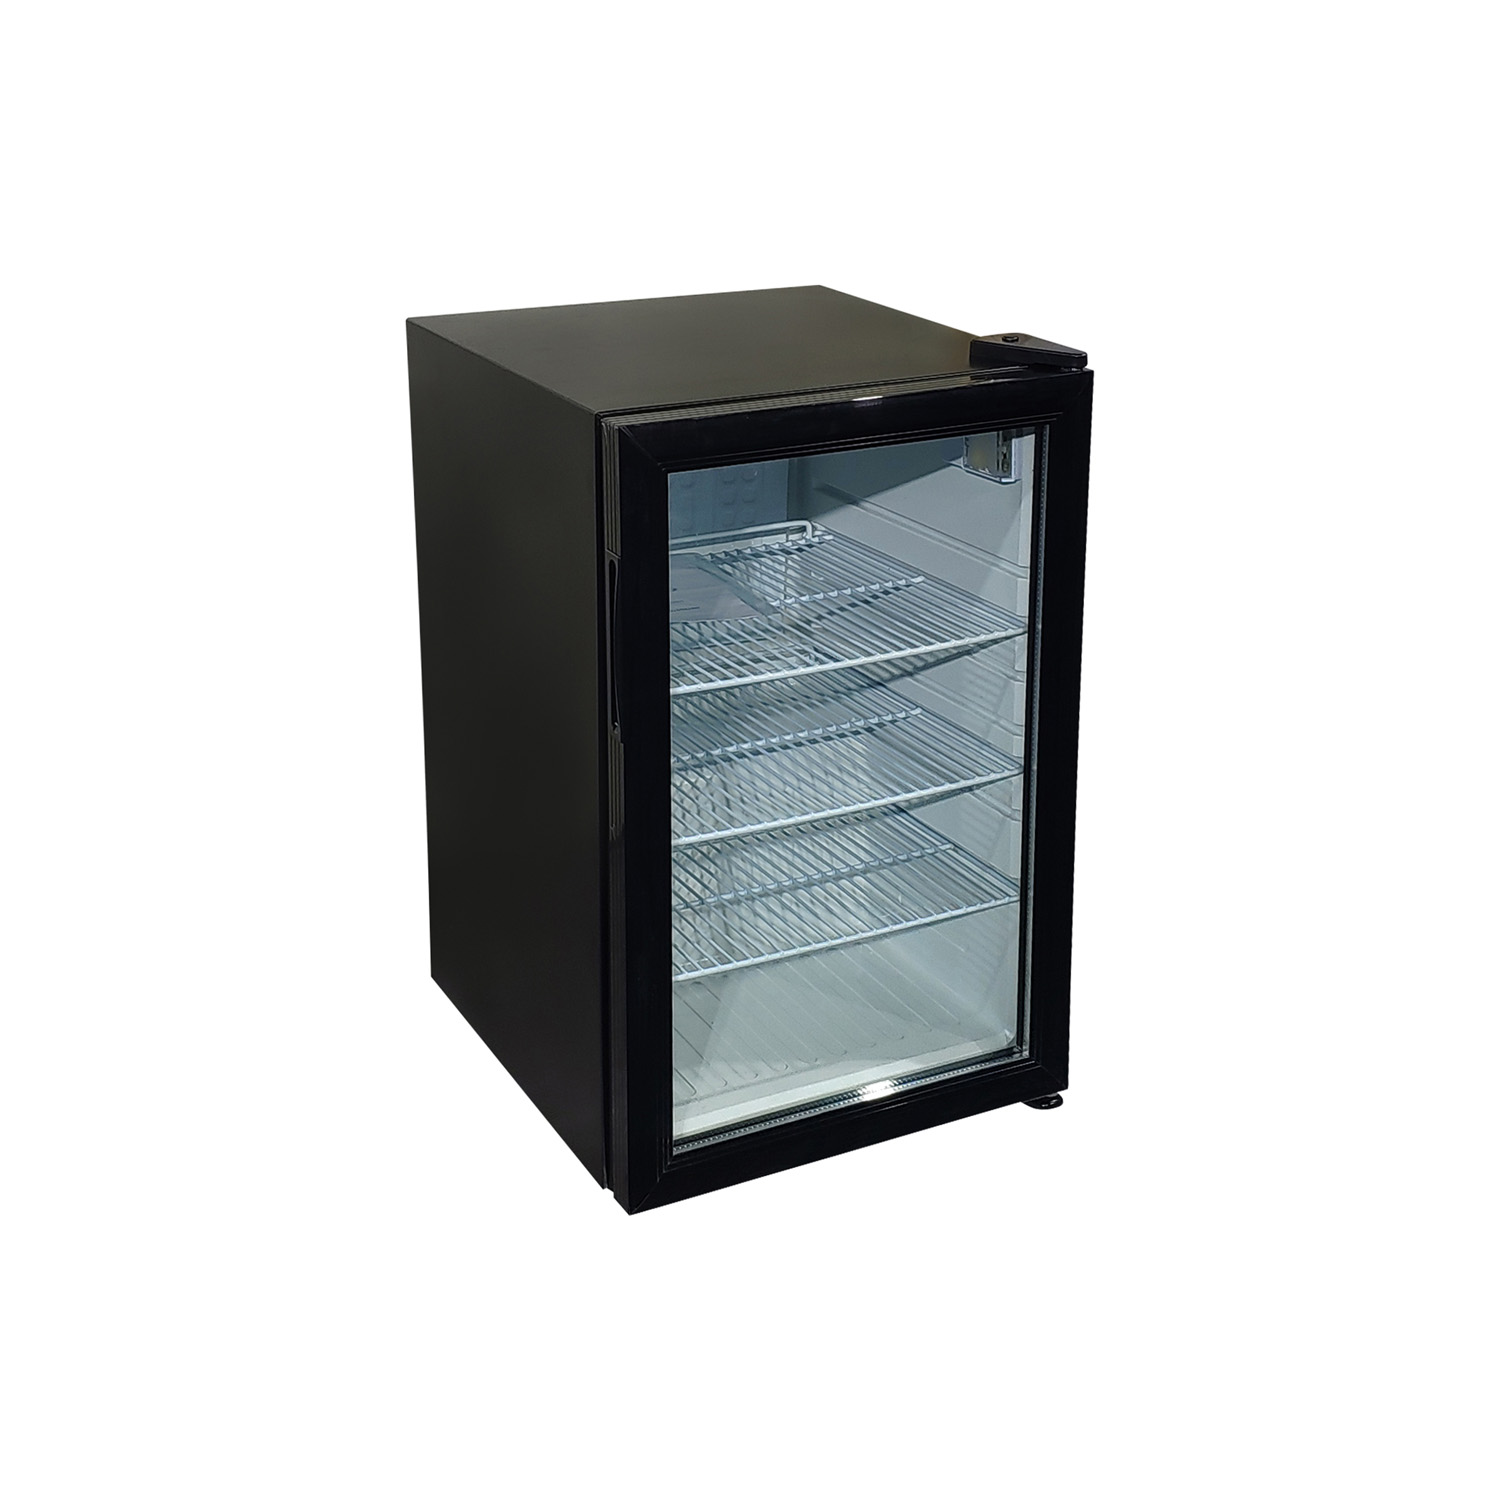 CAC China RFCS-27B Black Countertop Refrigerated Merchandiser, 18 3/4" x 17 1/8" x 27" H 